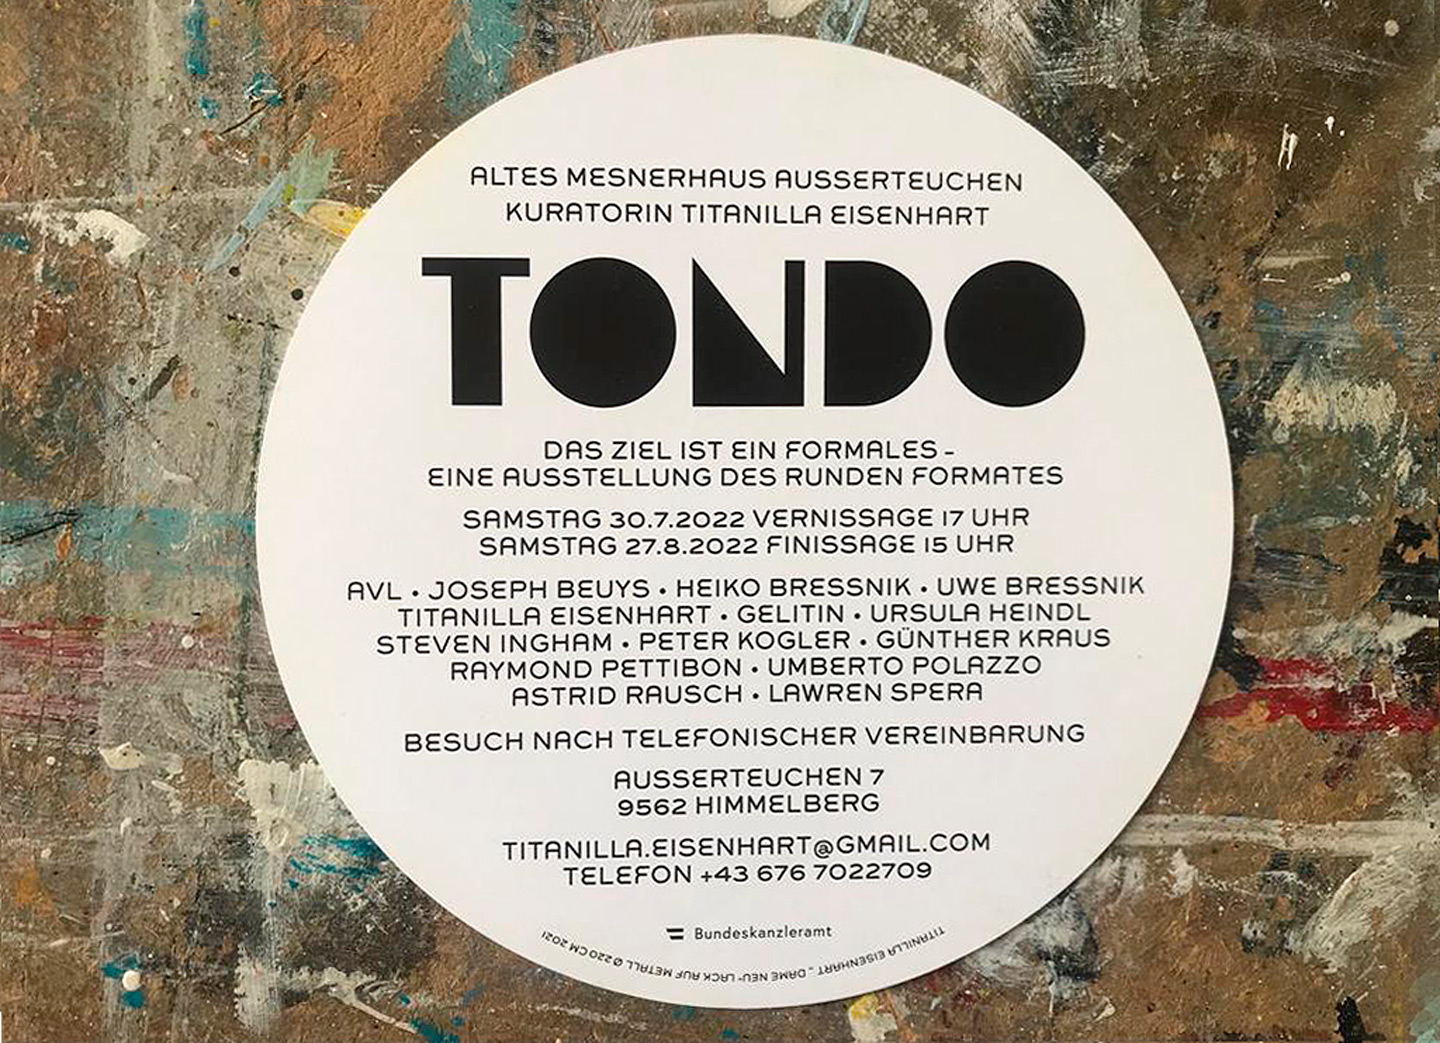 Tondo curated by Titanilla Eisenhart